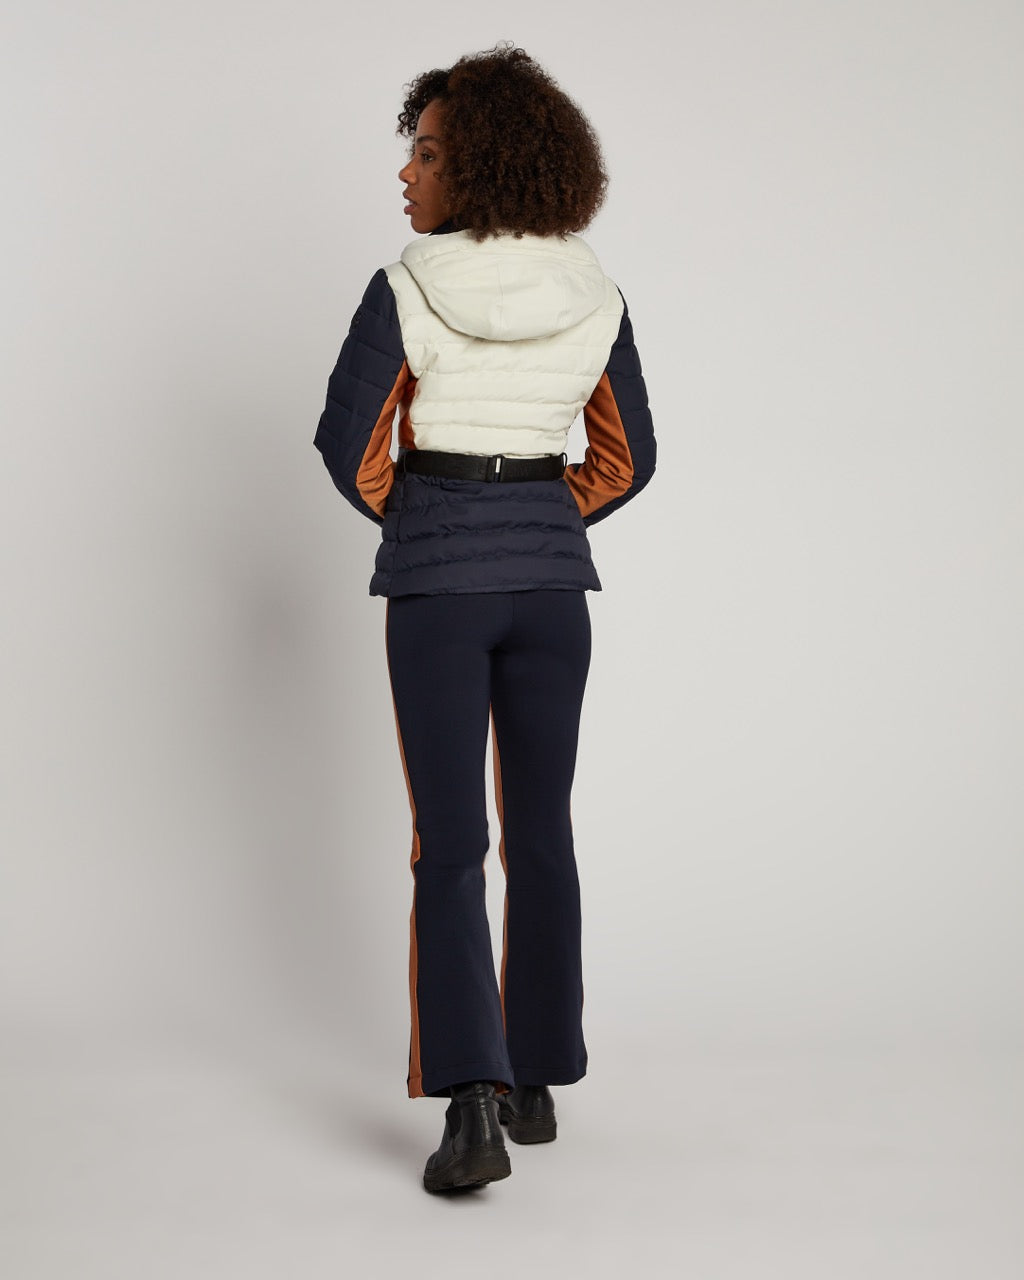 Erin Snow Women's Kat II Jacket in Eco Sporty - Navy/Bone/Copper